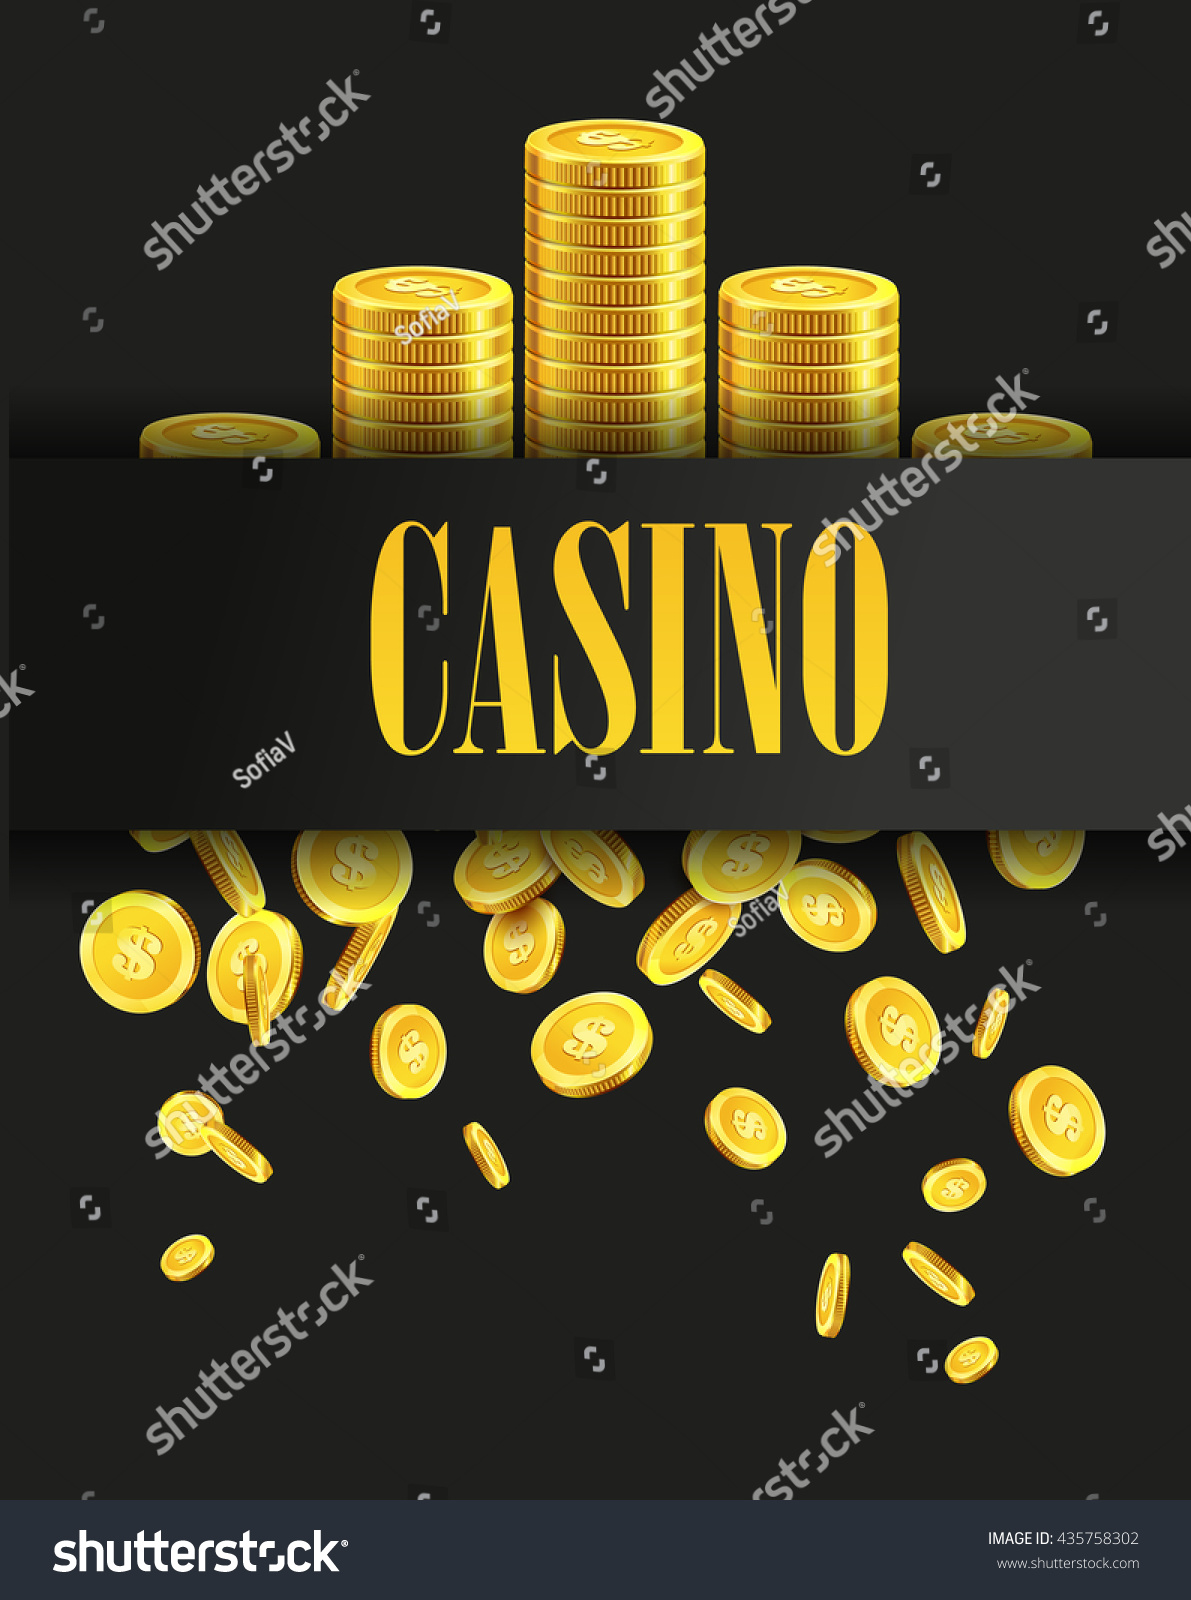 Casino Poster Background Flyer Golden Money Stock Vector 435758302 - Shutterstock